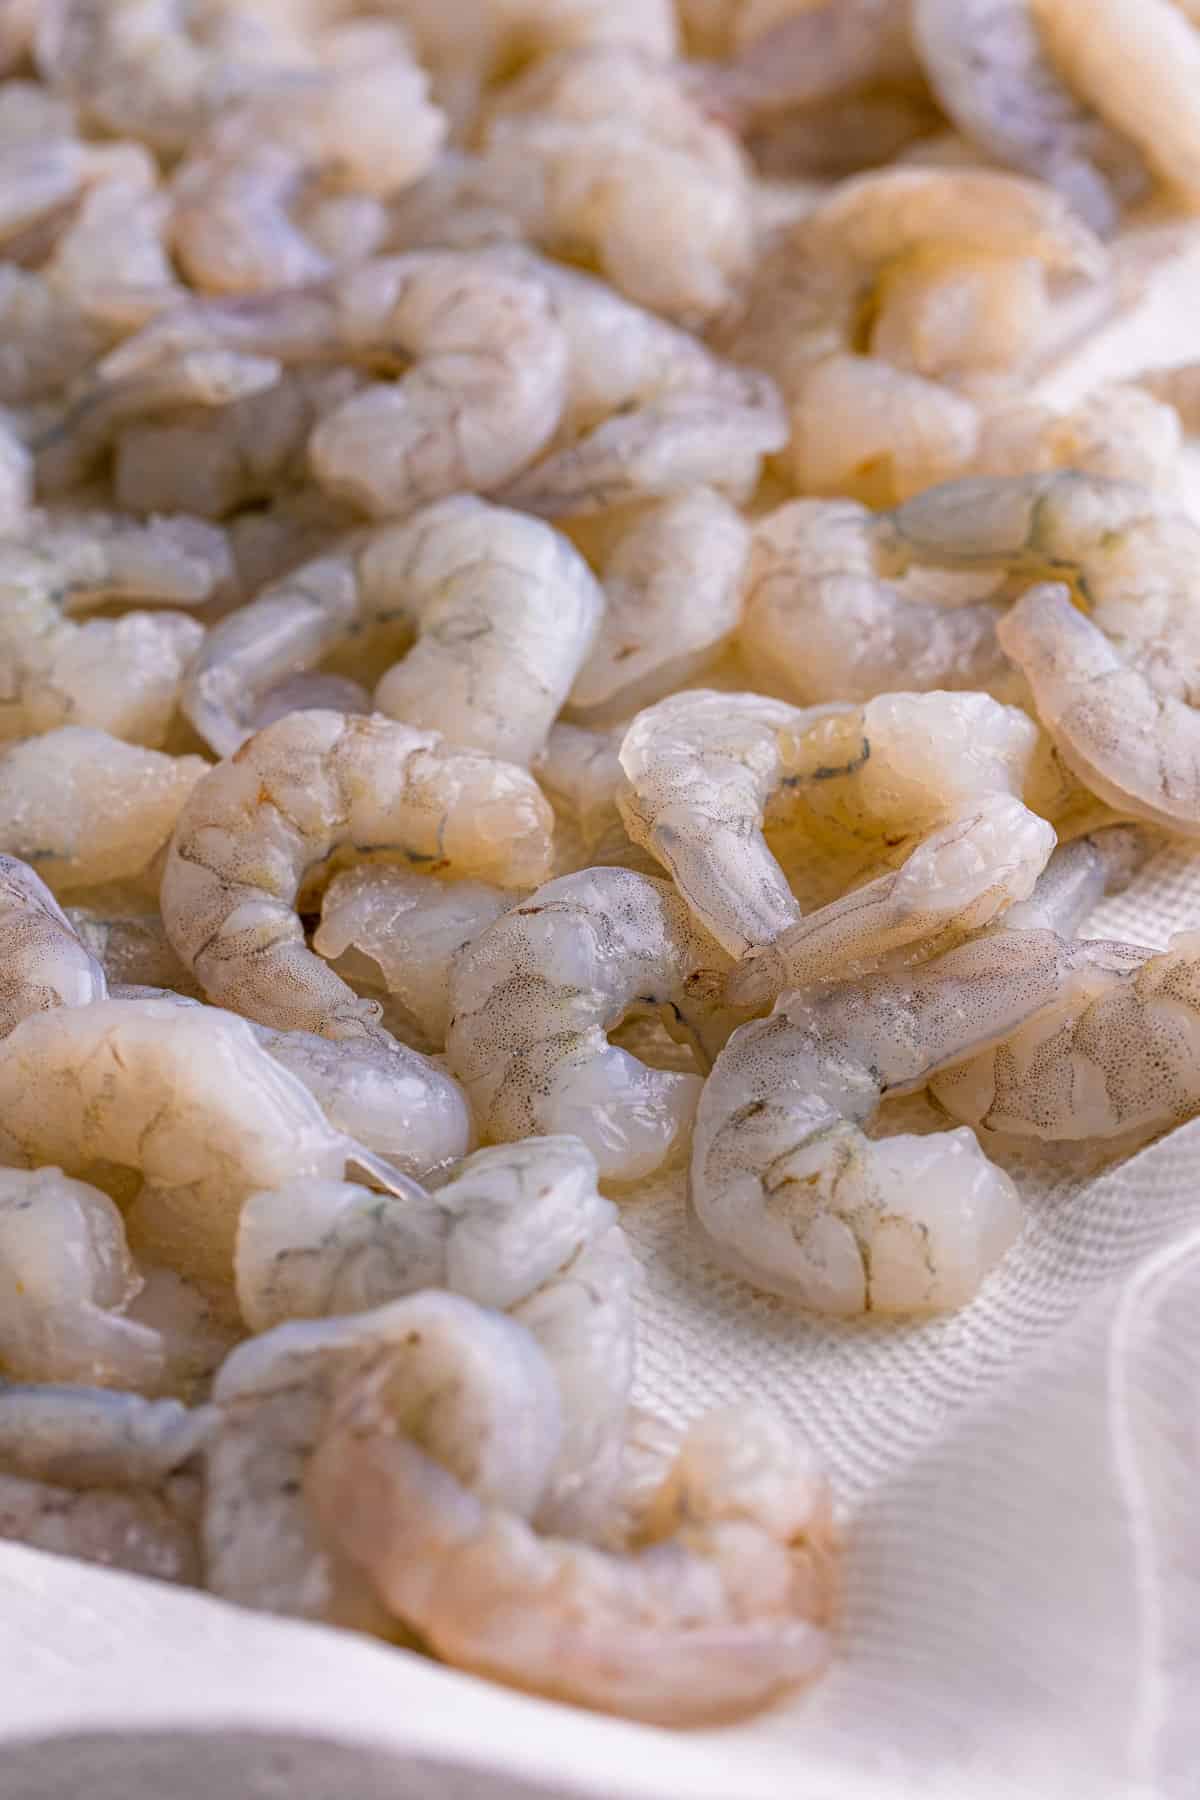 Raw shrimp on paper towel.